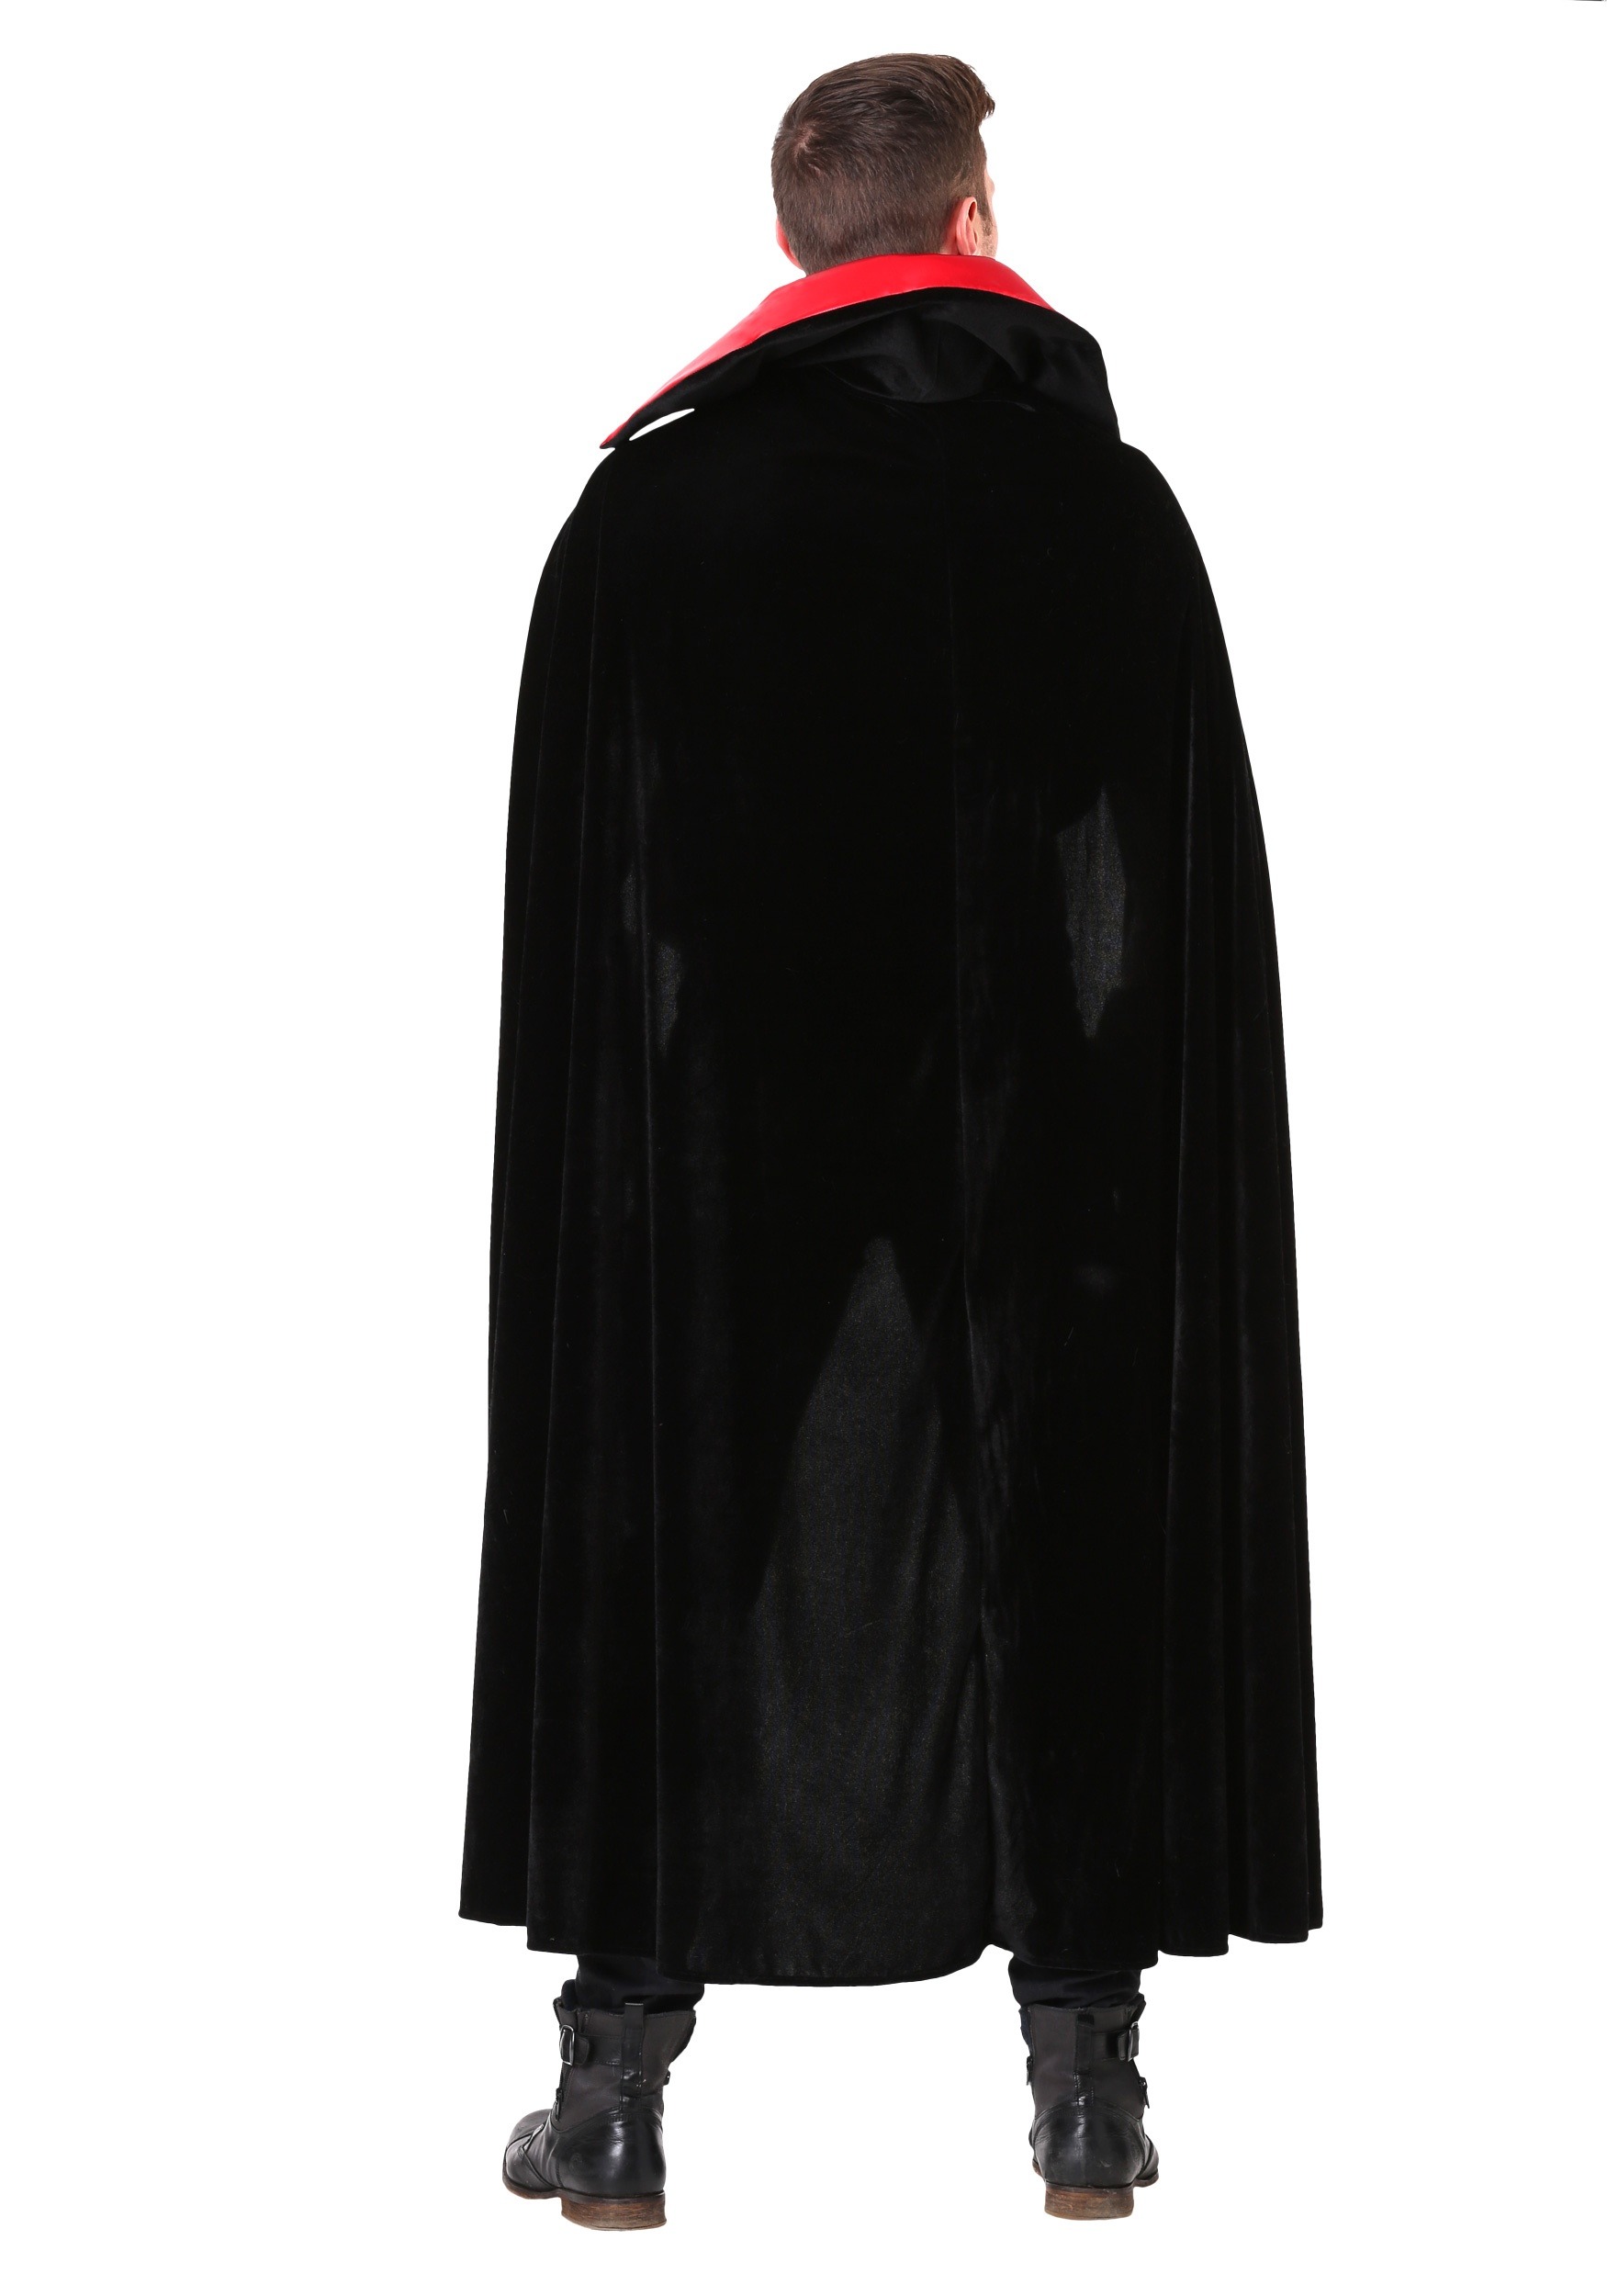 Adult Red Vampire Cloak Fancy Dress Costume